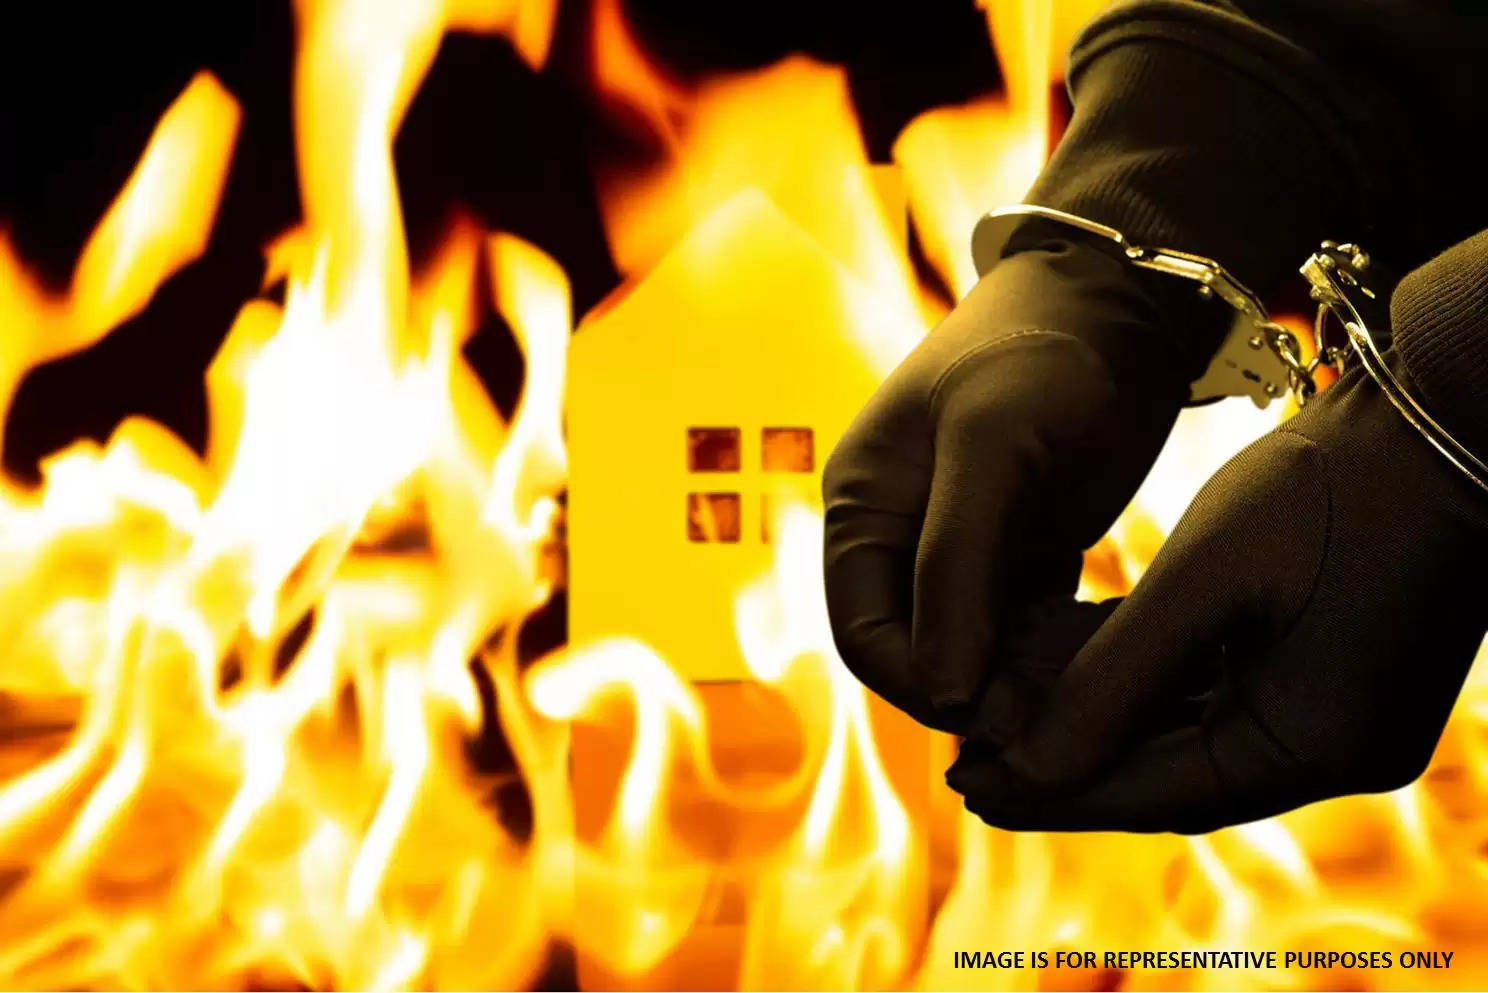 ARSON IN UDAIPUR TEMPLE BURNING ISSUE IN UDAIPUR WHO BURNT IDOLS IN UDAIPUR SURAJPOL MANDIR FIRE